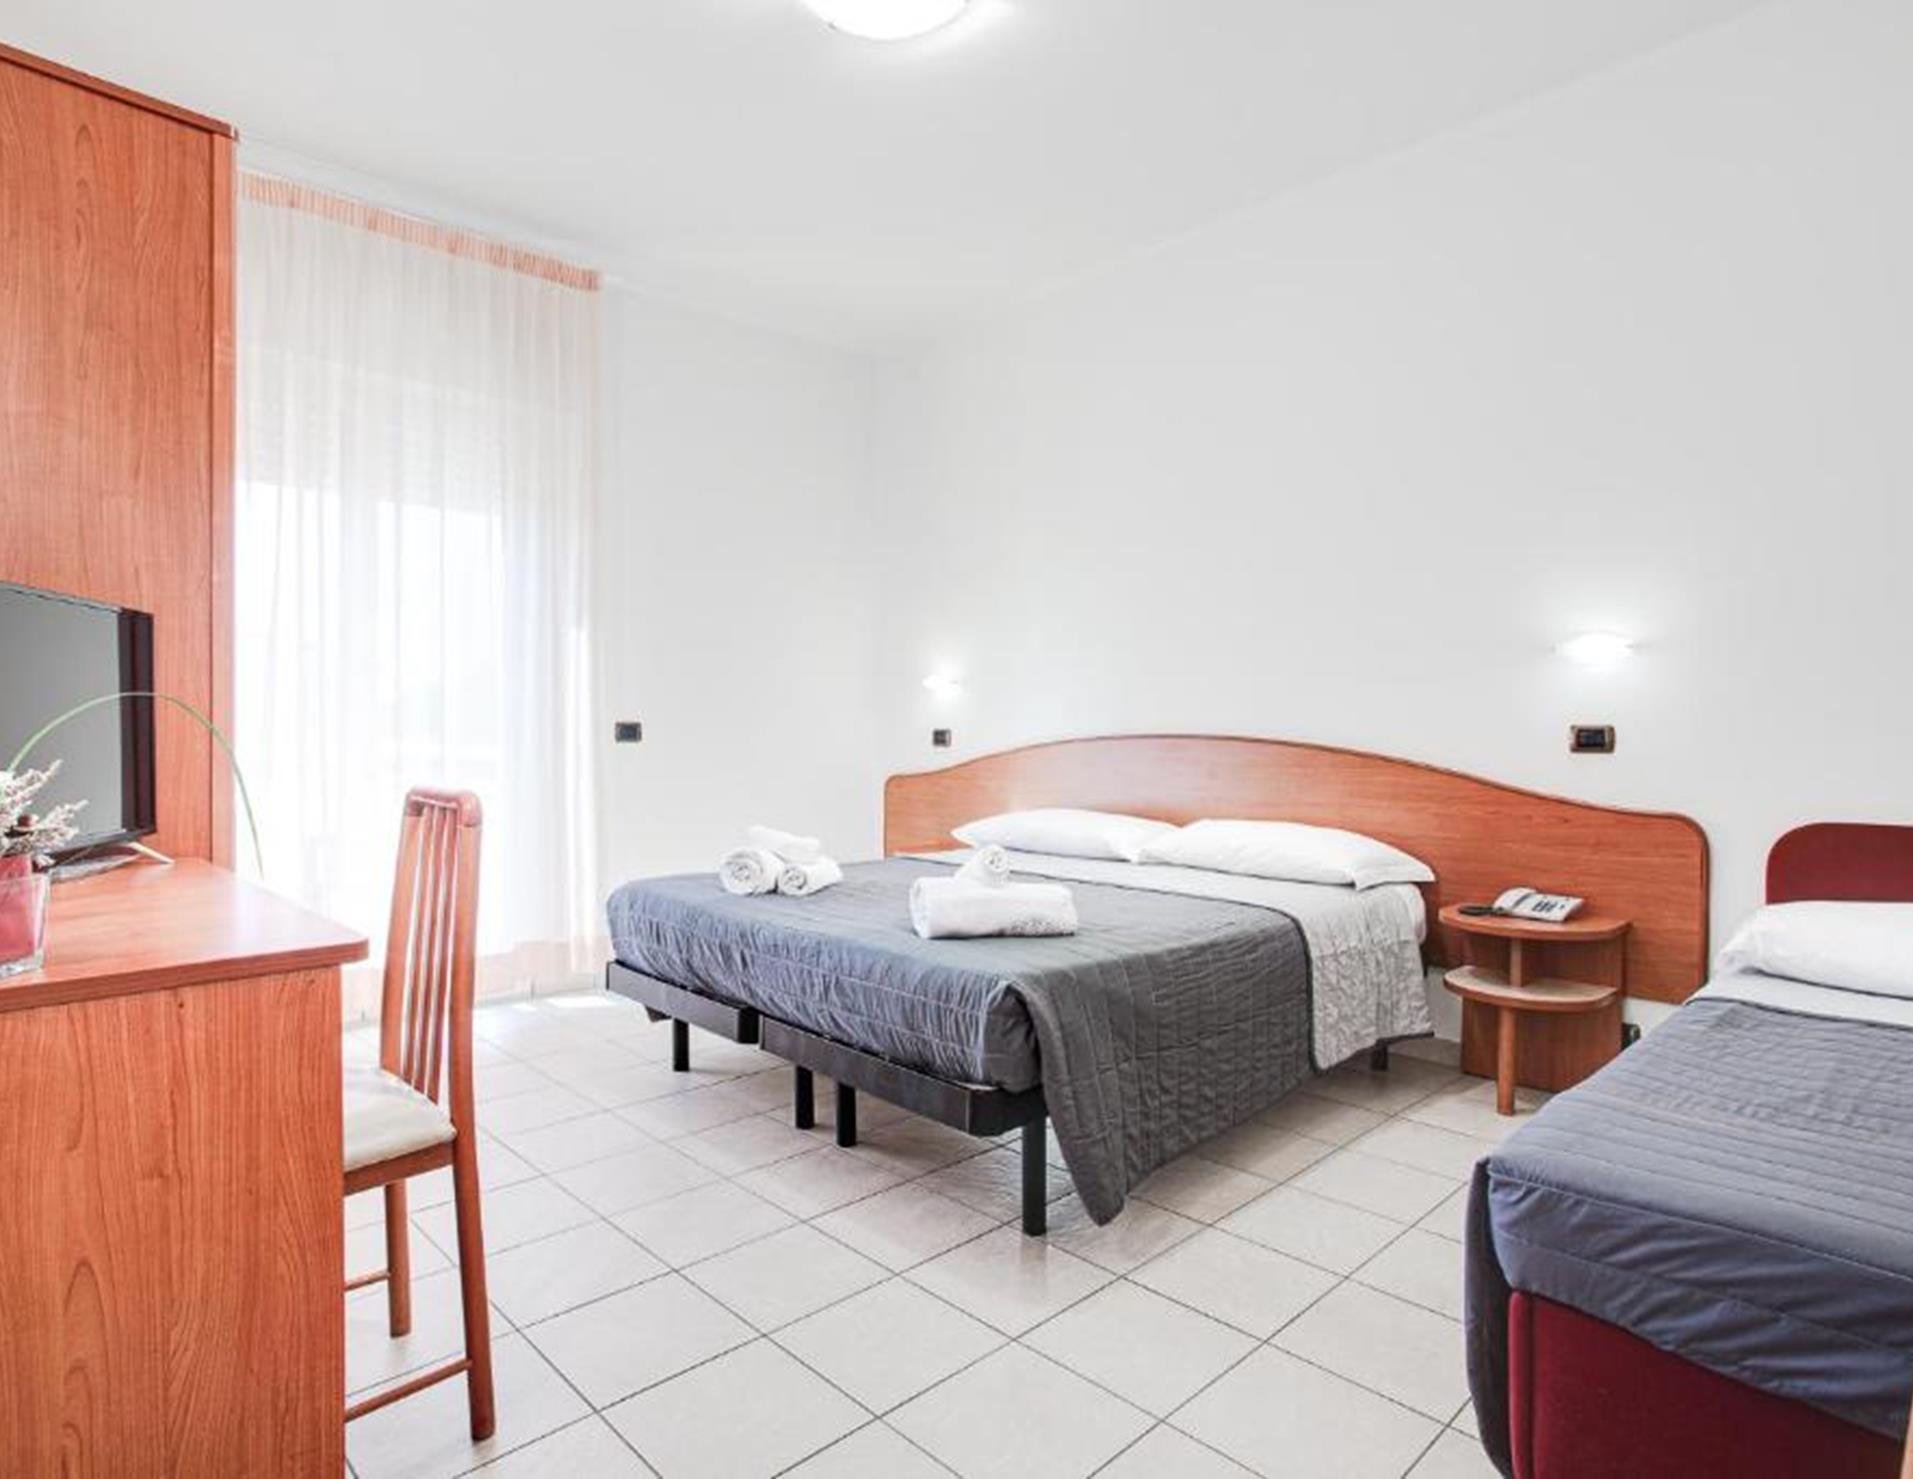 Hotel Villa Maria - Room 2